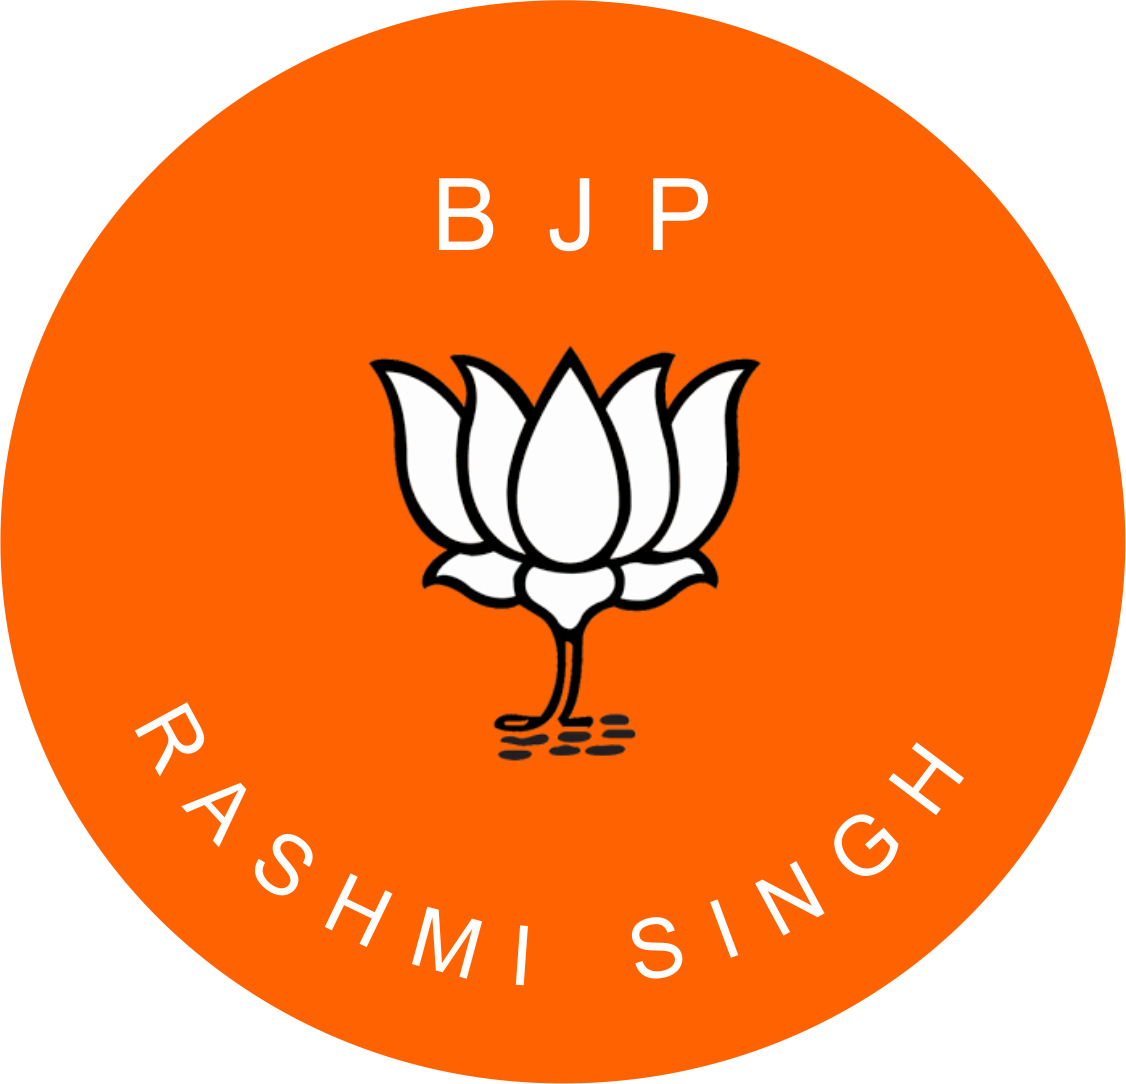 Download Bharatiya Janata Party PNG Image with No Background 